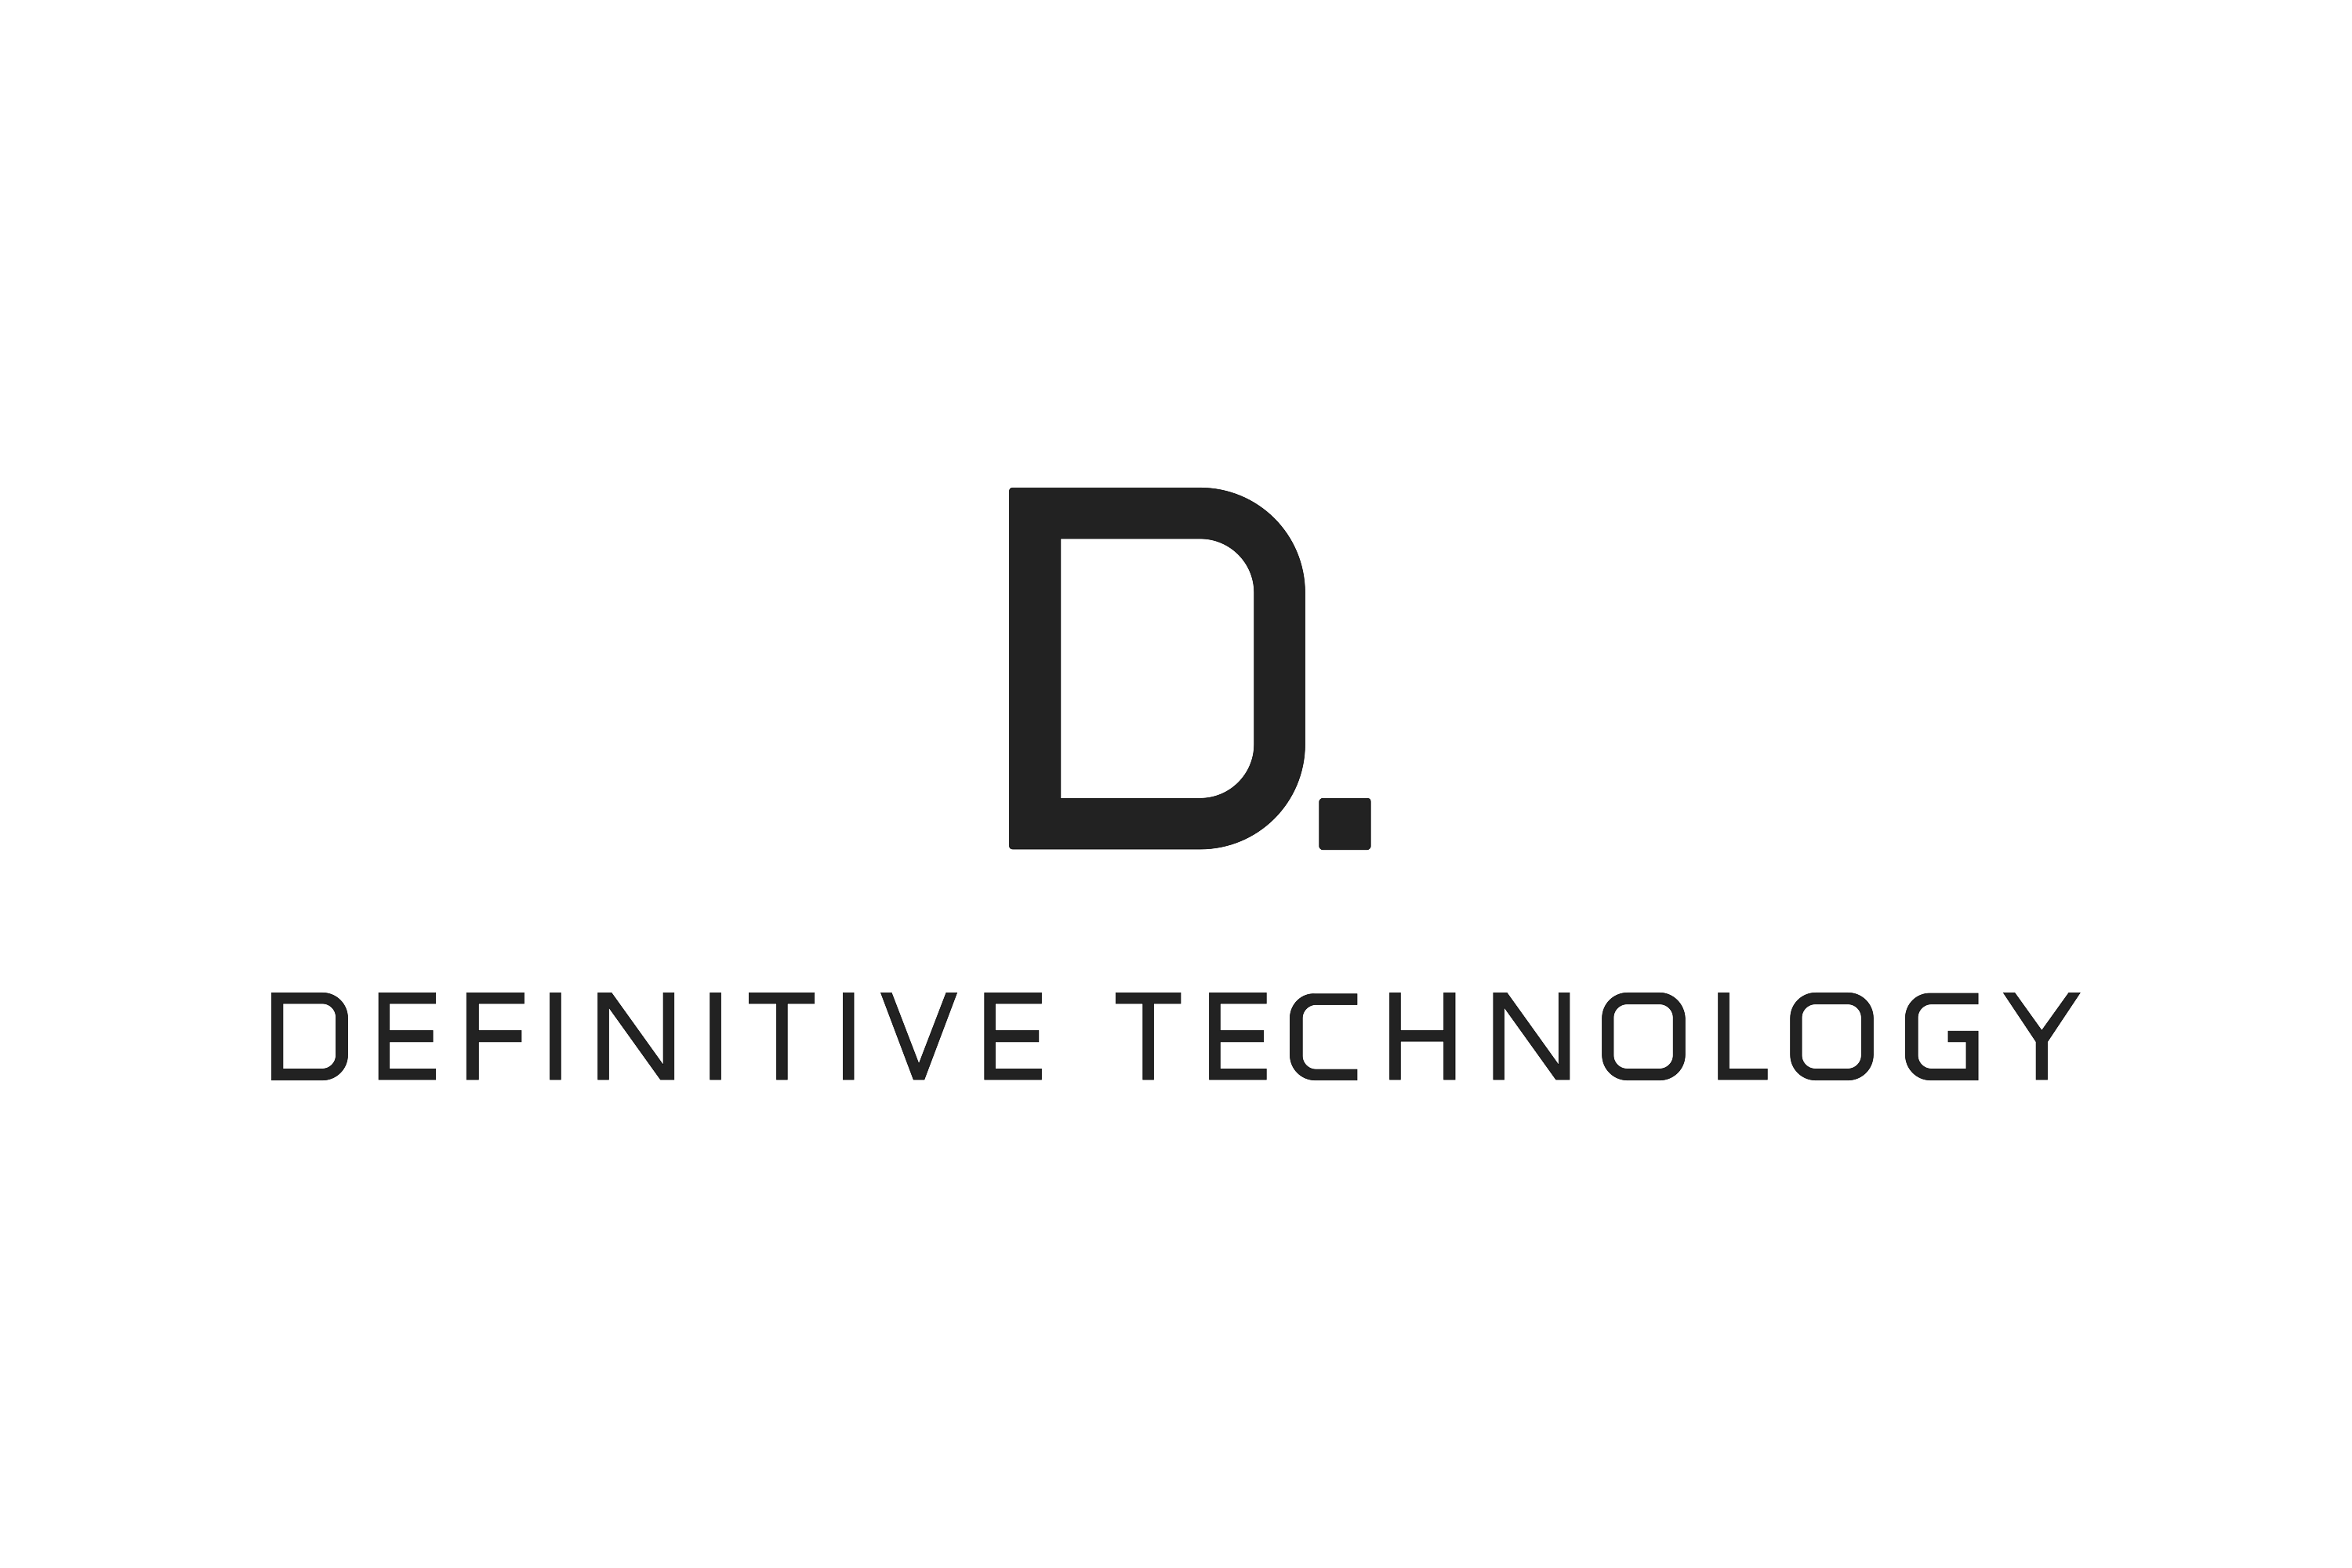 Download Definitive Technology Logo in SVG Vector or PNG File Format - Logo .wine